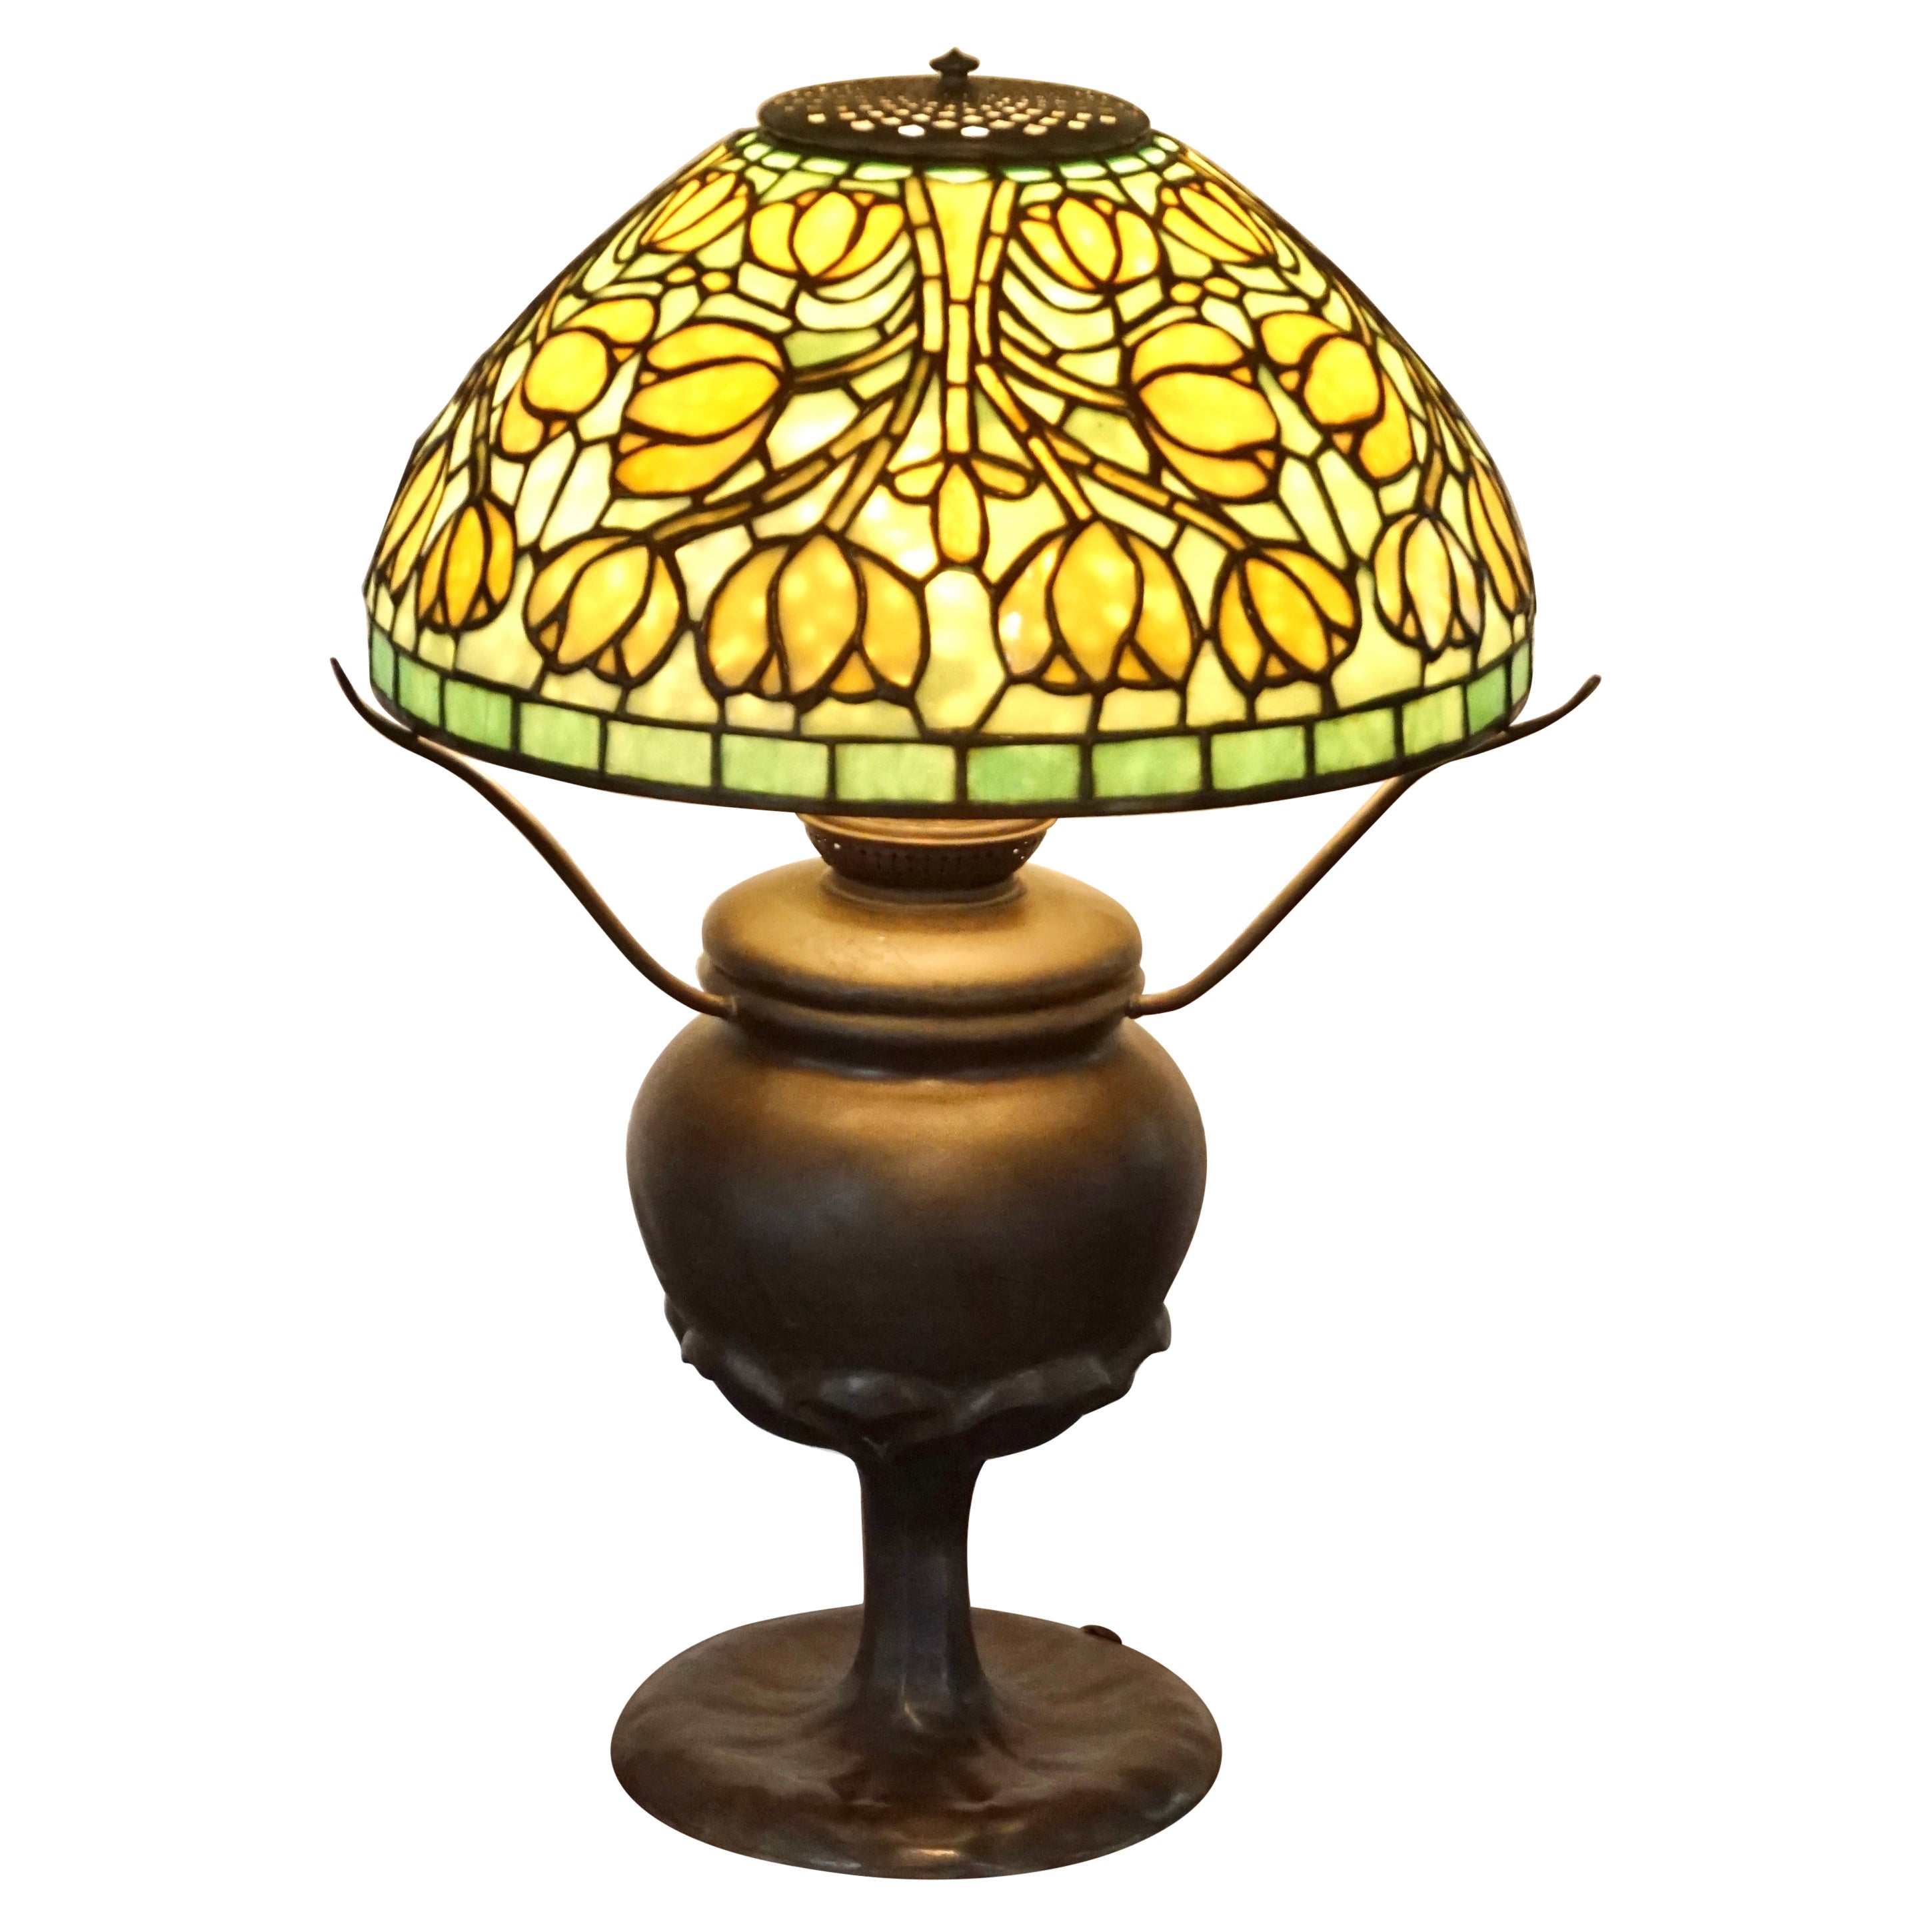 Tiffany Studios Crocus Table Lamp